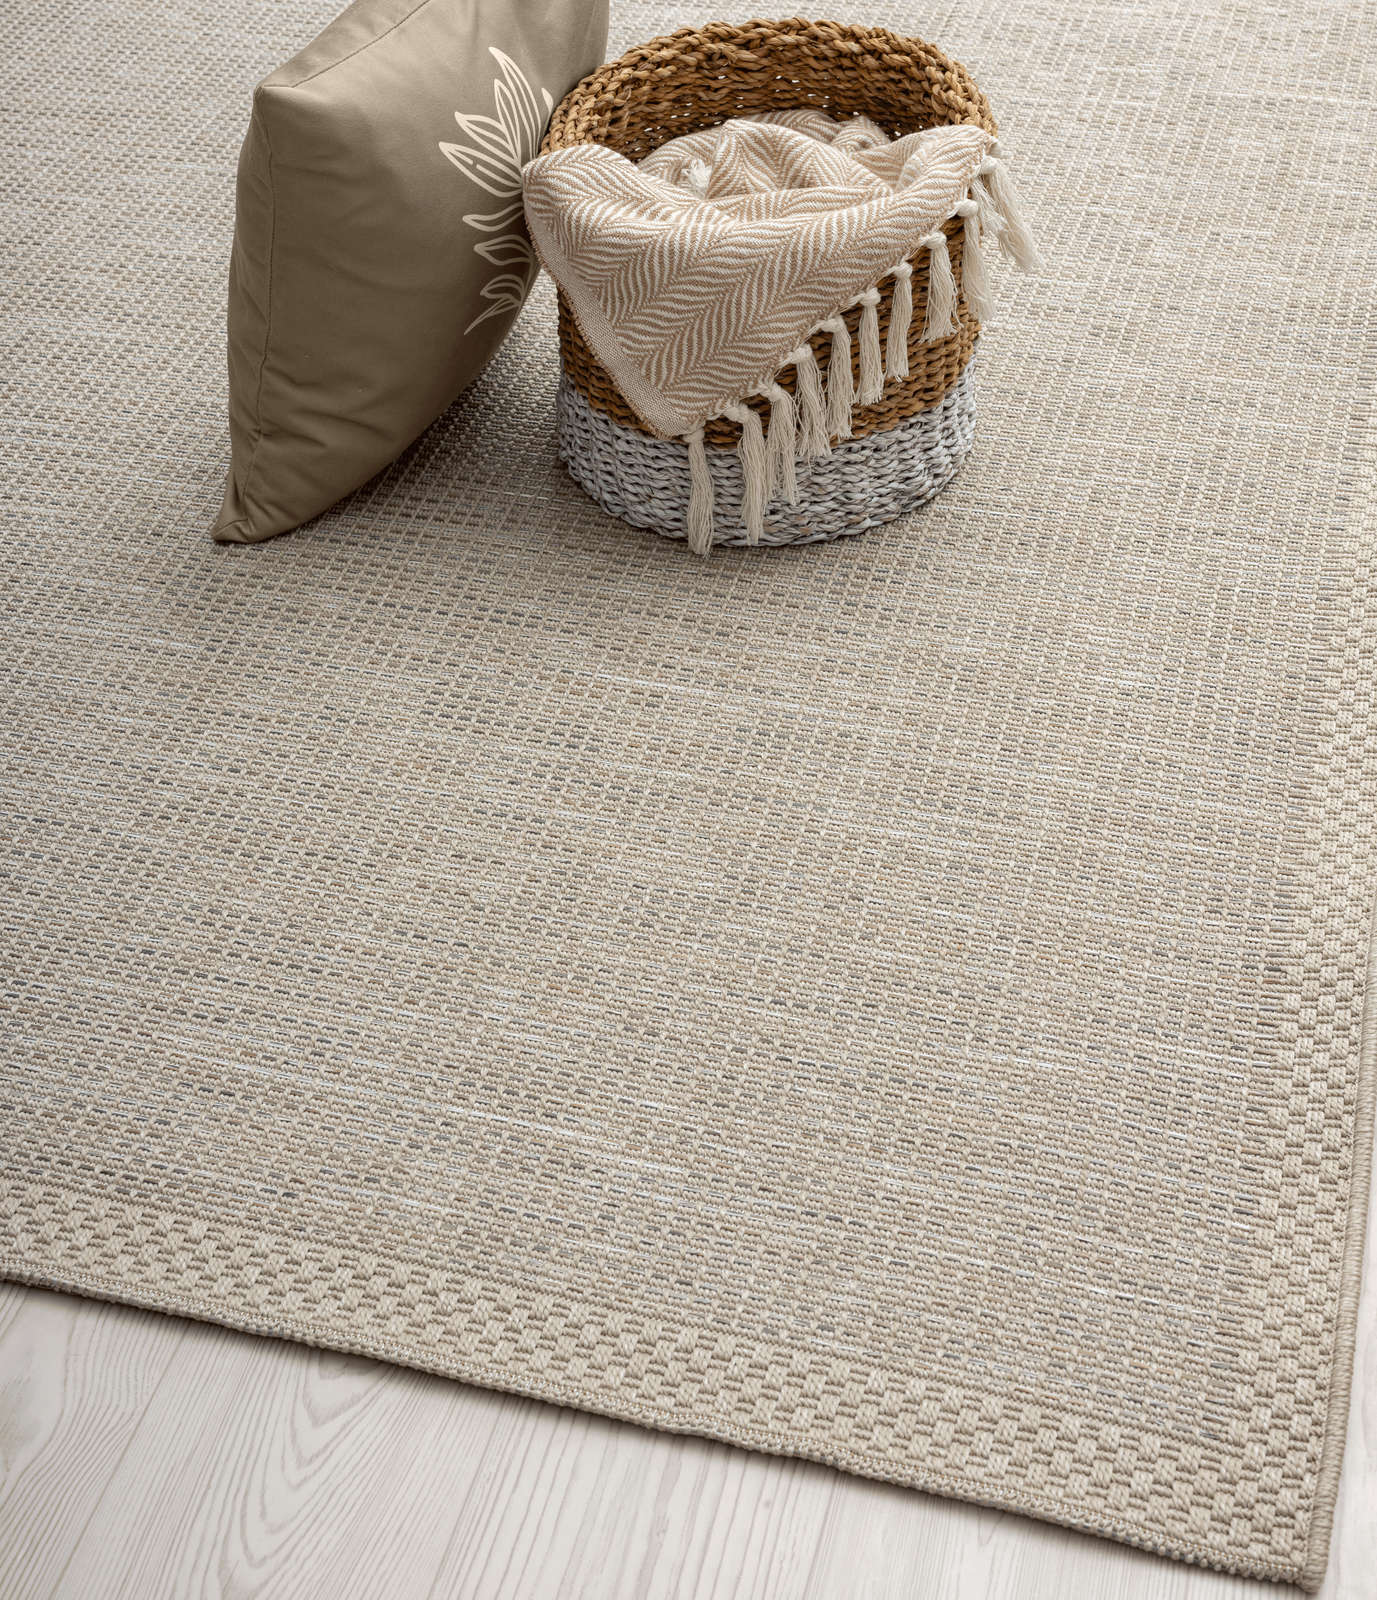             Flachgewebe Outdoor Teppich in Greige – 150 x 80 cm
        